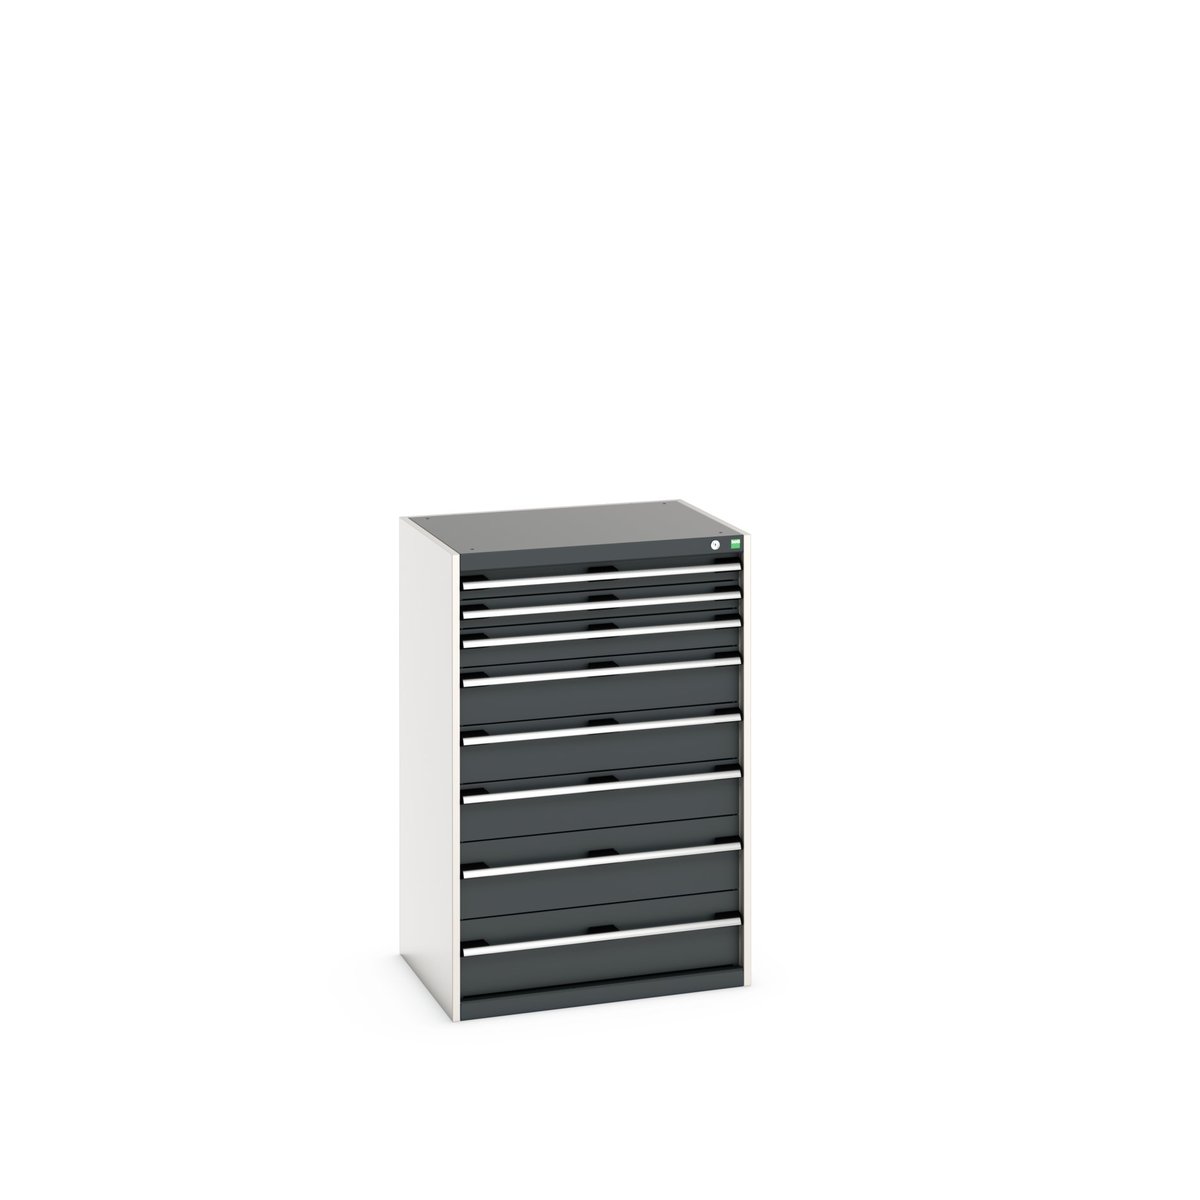 40020061. - cubio drawer cabinet